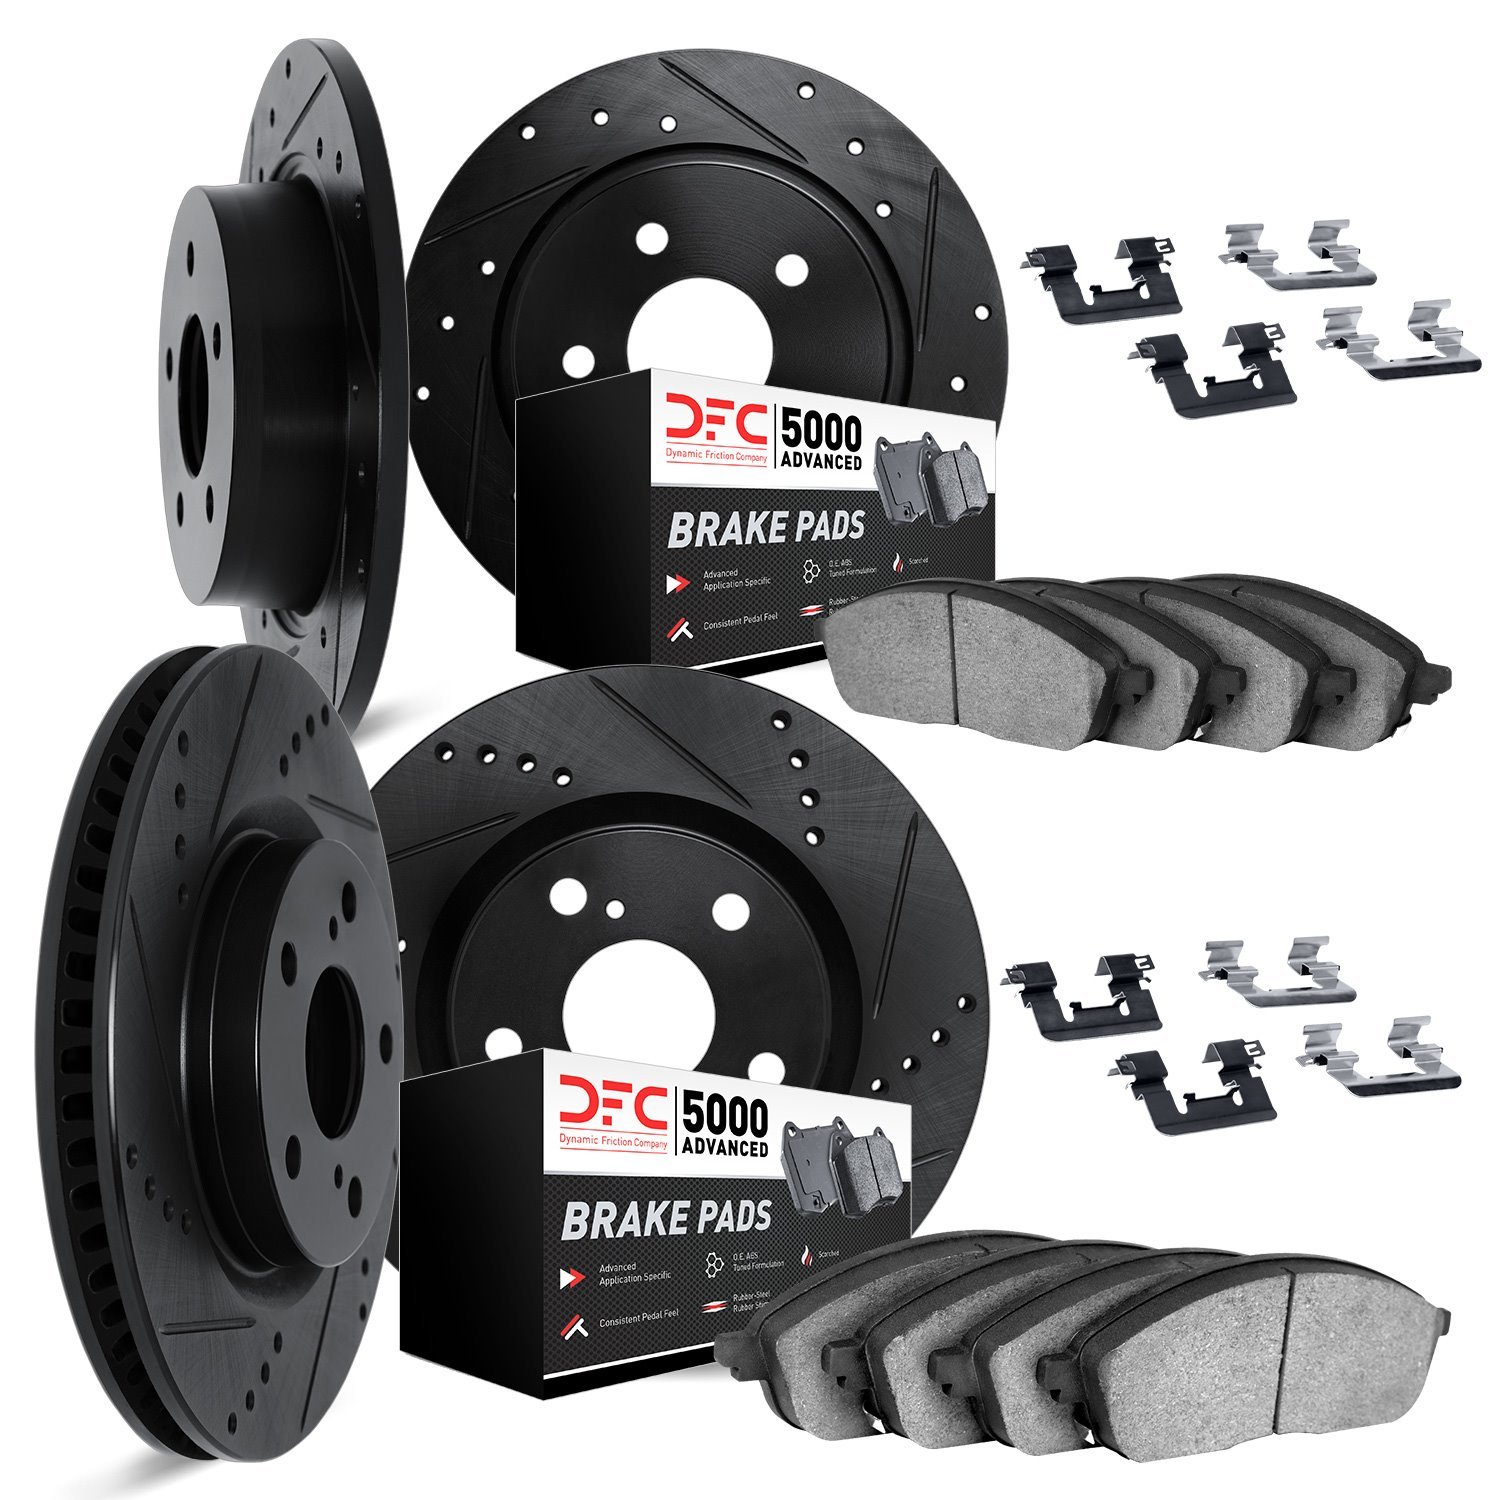 8514-54381 Drilled/Slotted Brake Rotors w/5000 Advanced Brake Pads Kit & Hardware [Black], 2013-2020 Ford/Lincoln/Mercury/Mazda,